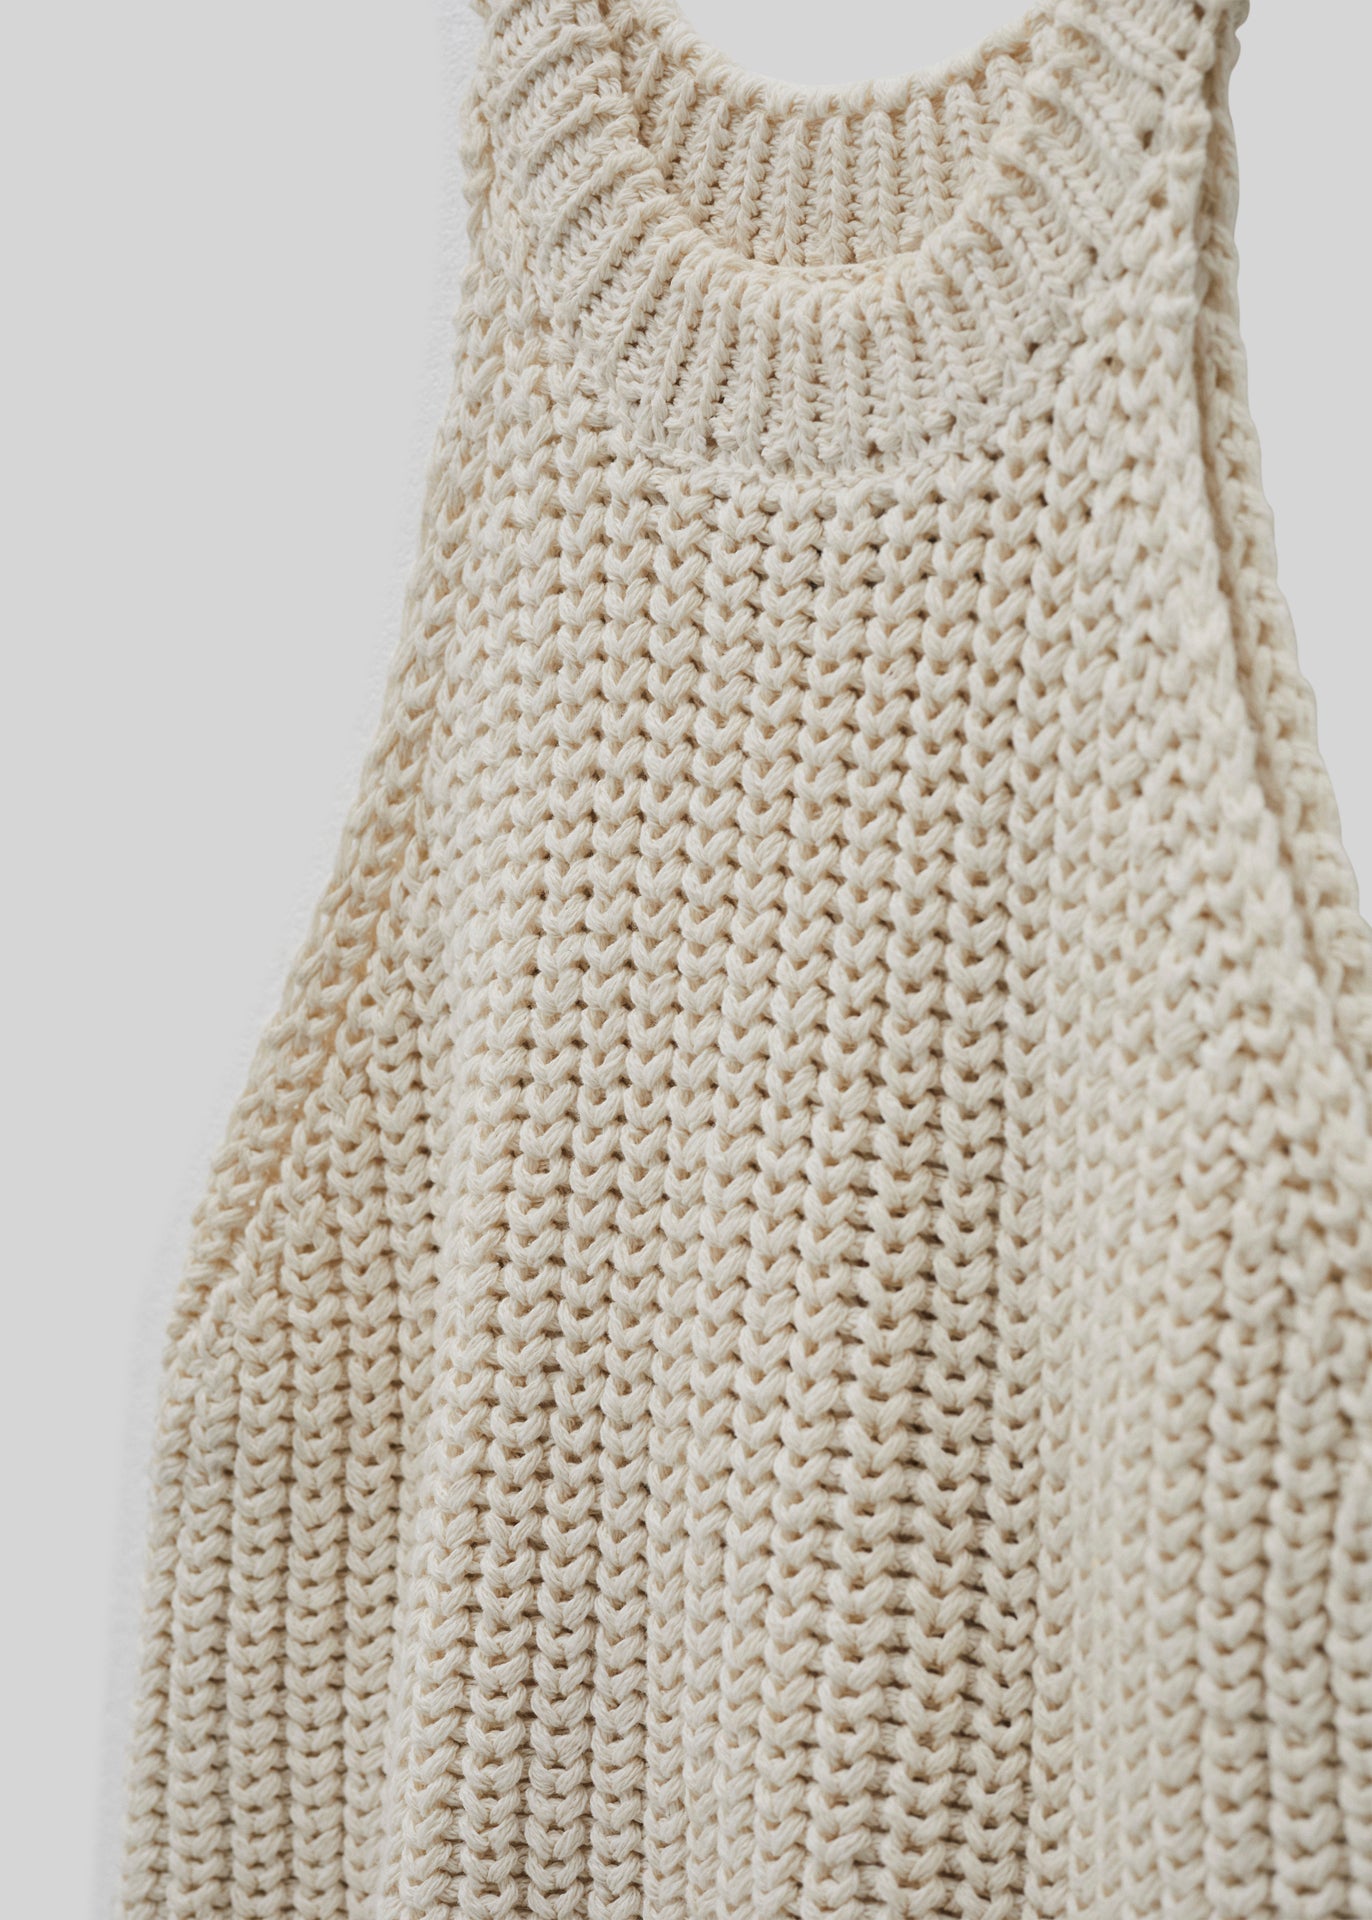 Cordera knit top - M